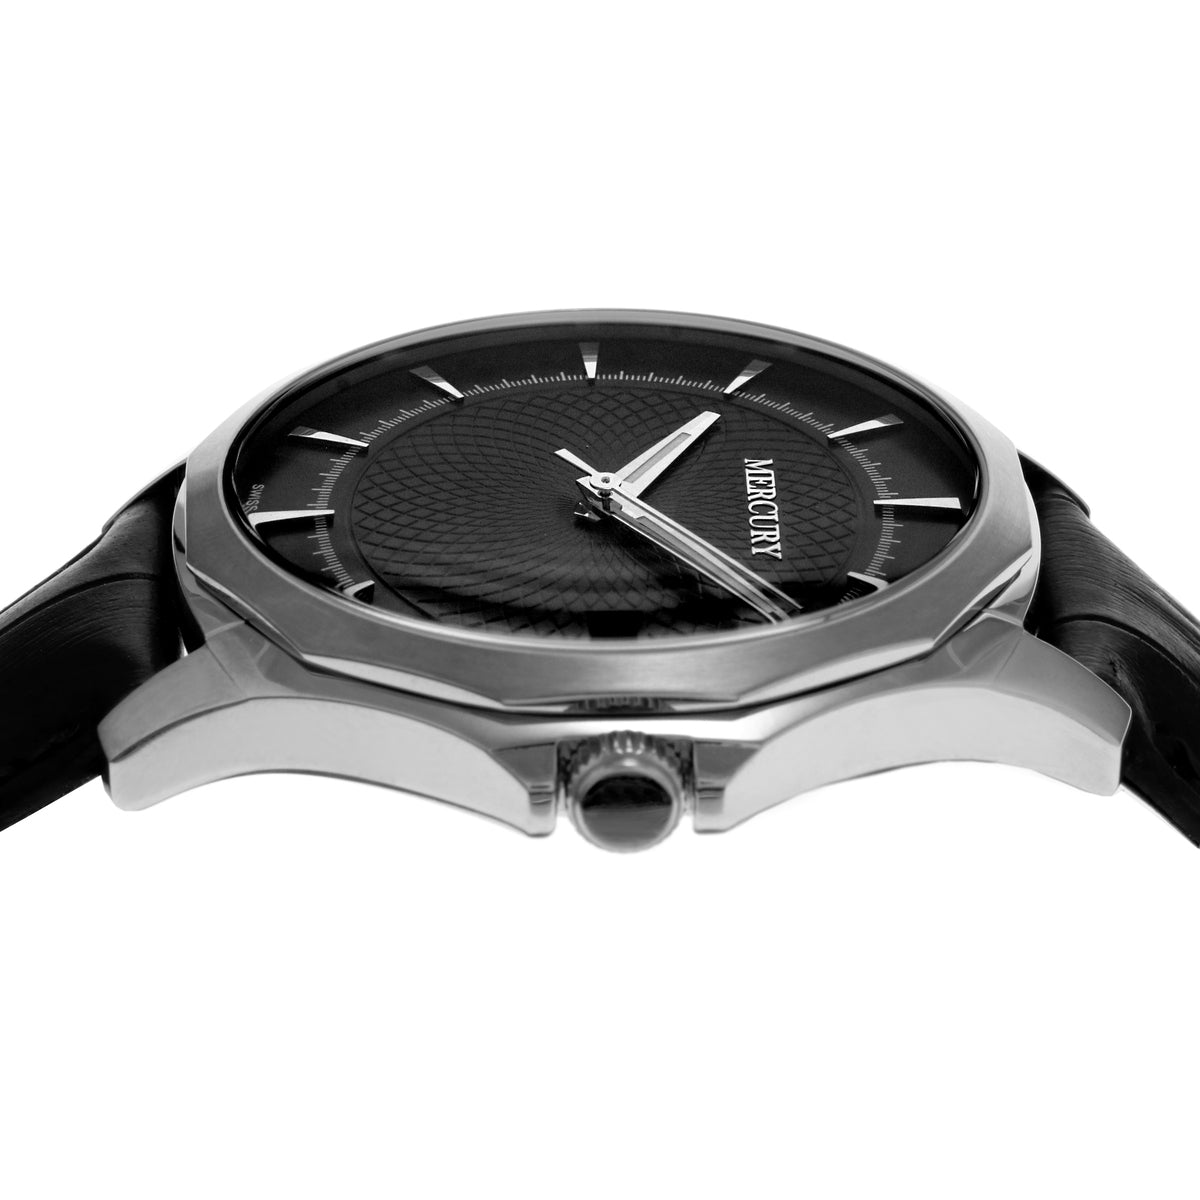 Mercury Men's Swiss Quartz Watch with Black Dial - MER-0043